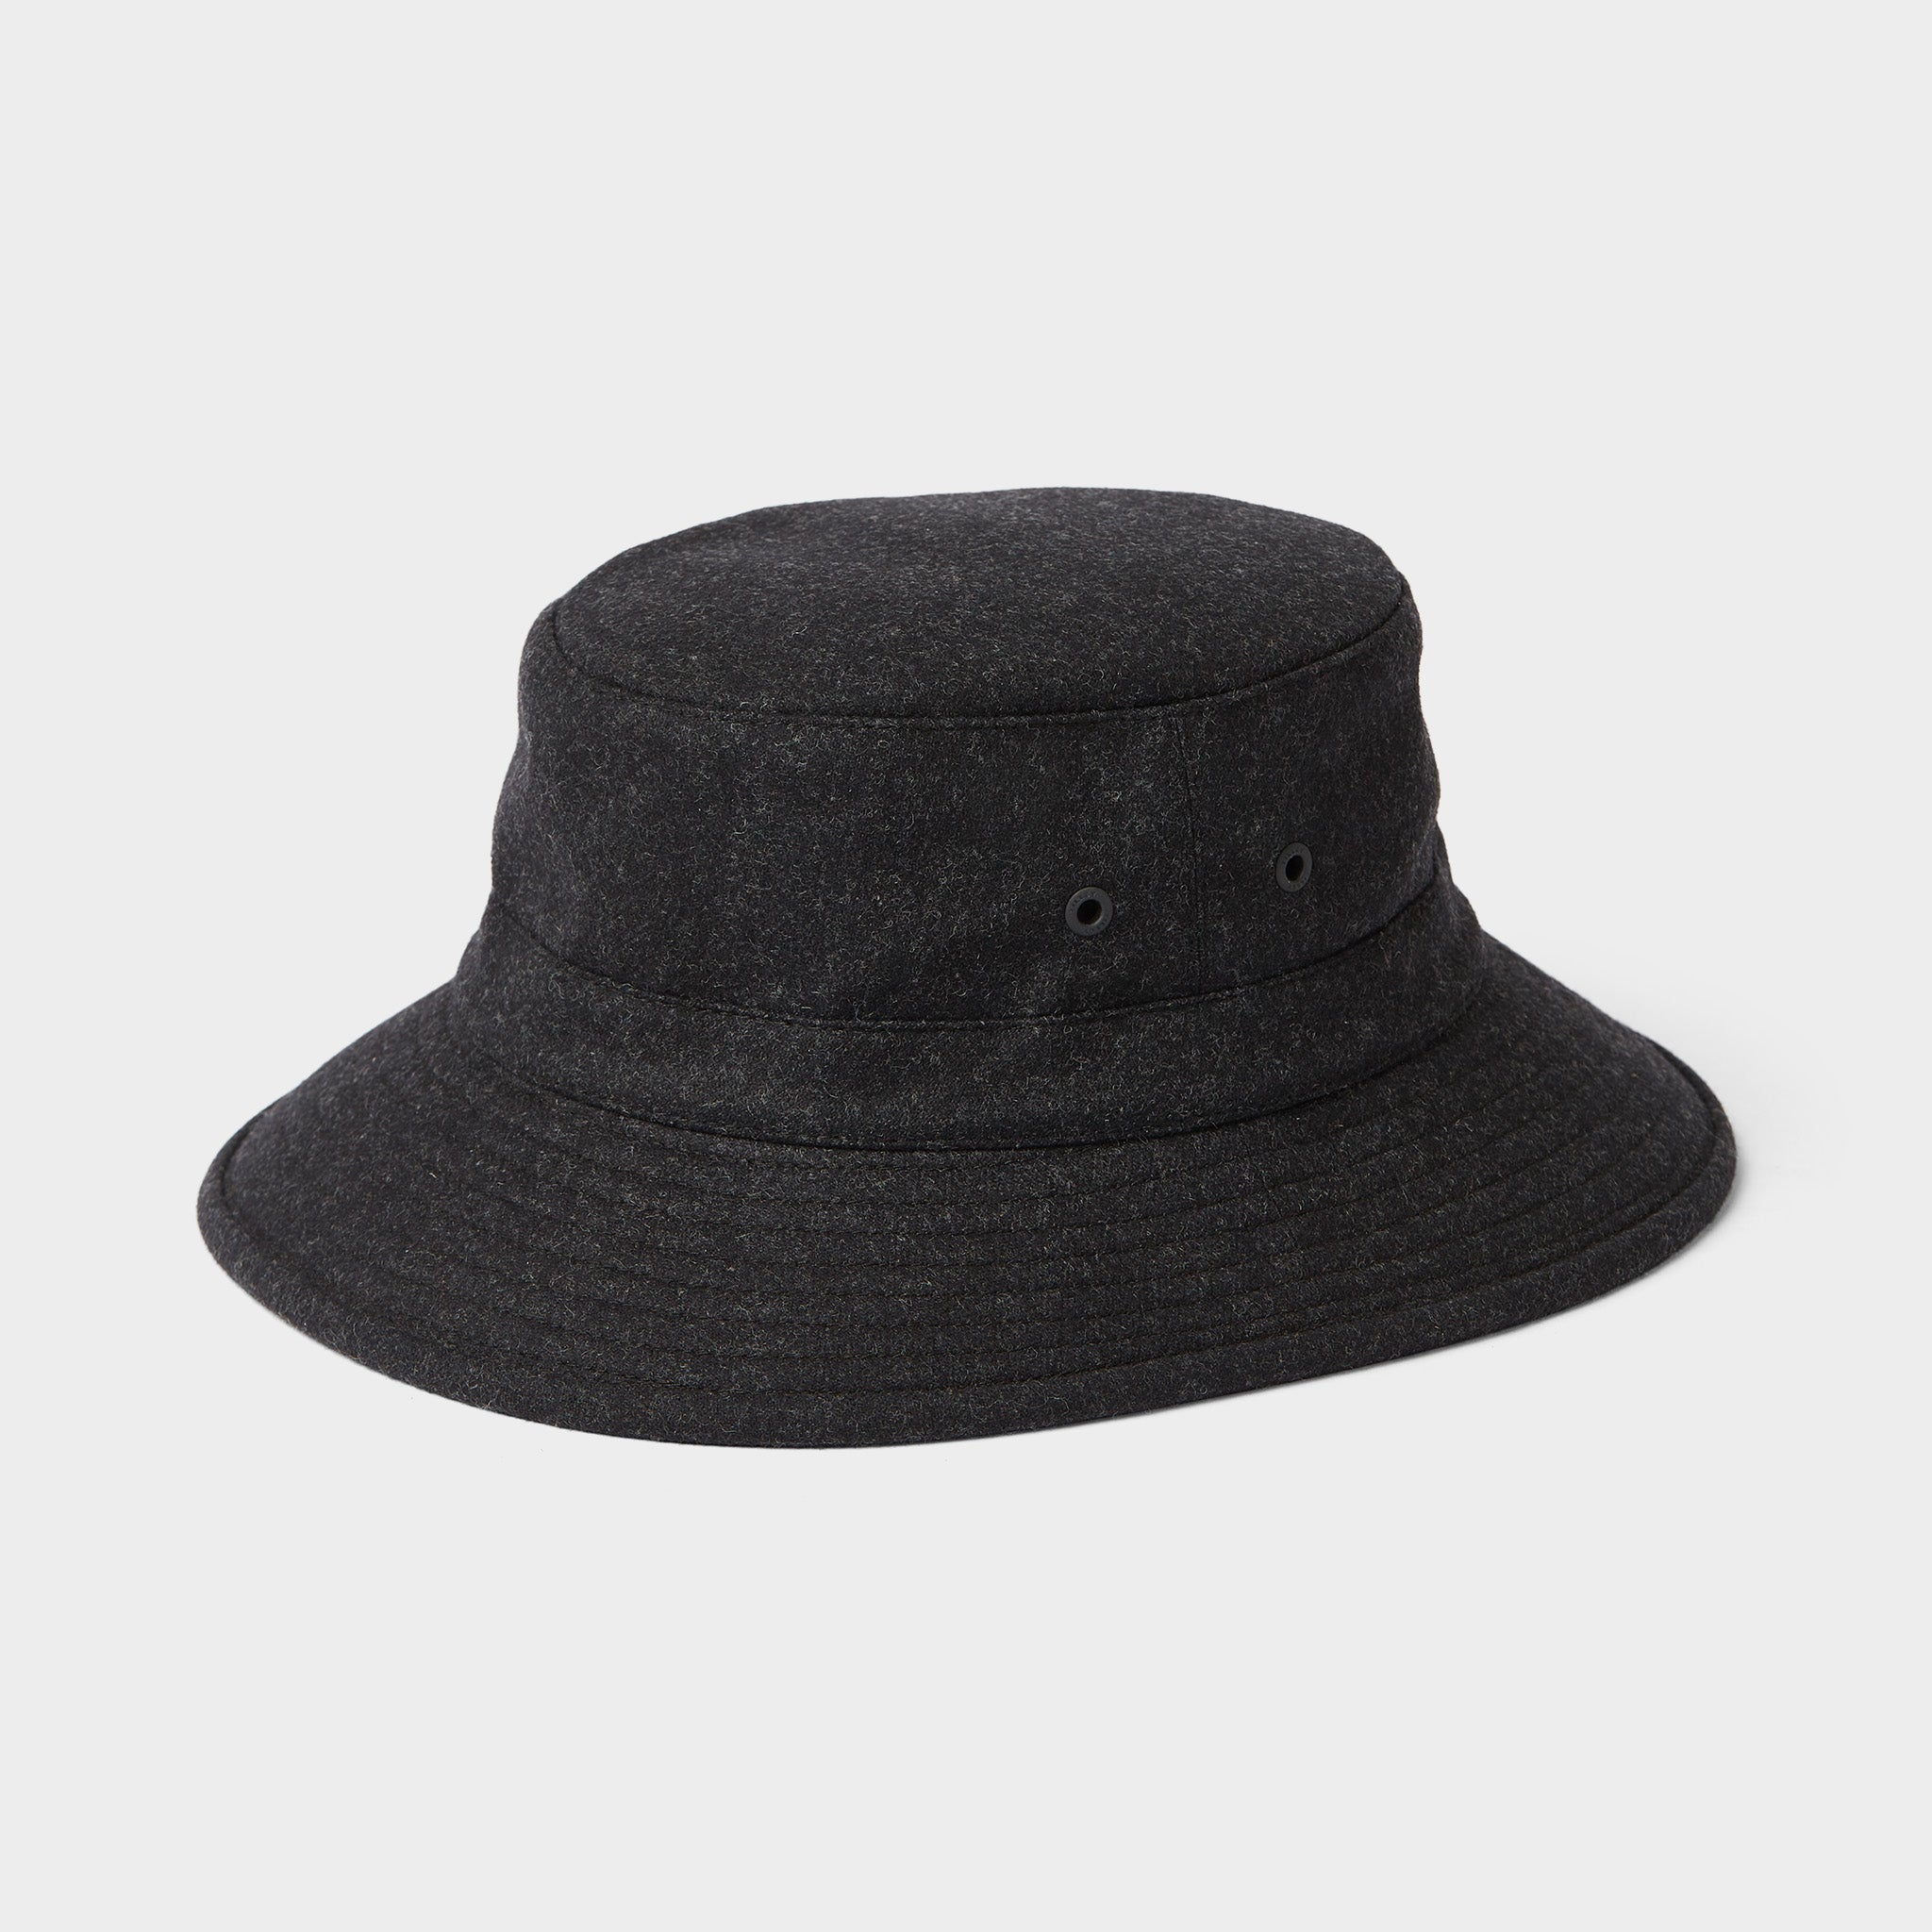 Cotton Beach Hat For Men And Women Big Bone Design, Plus Size